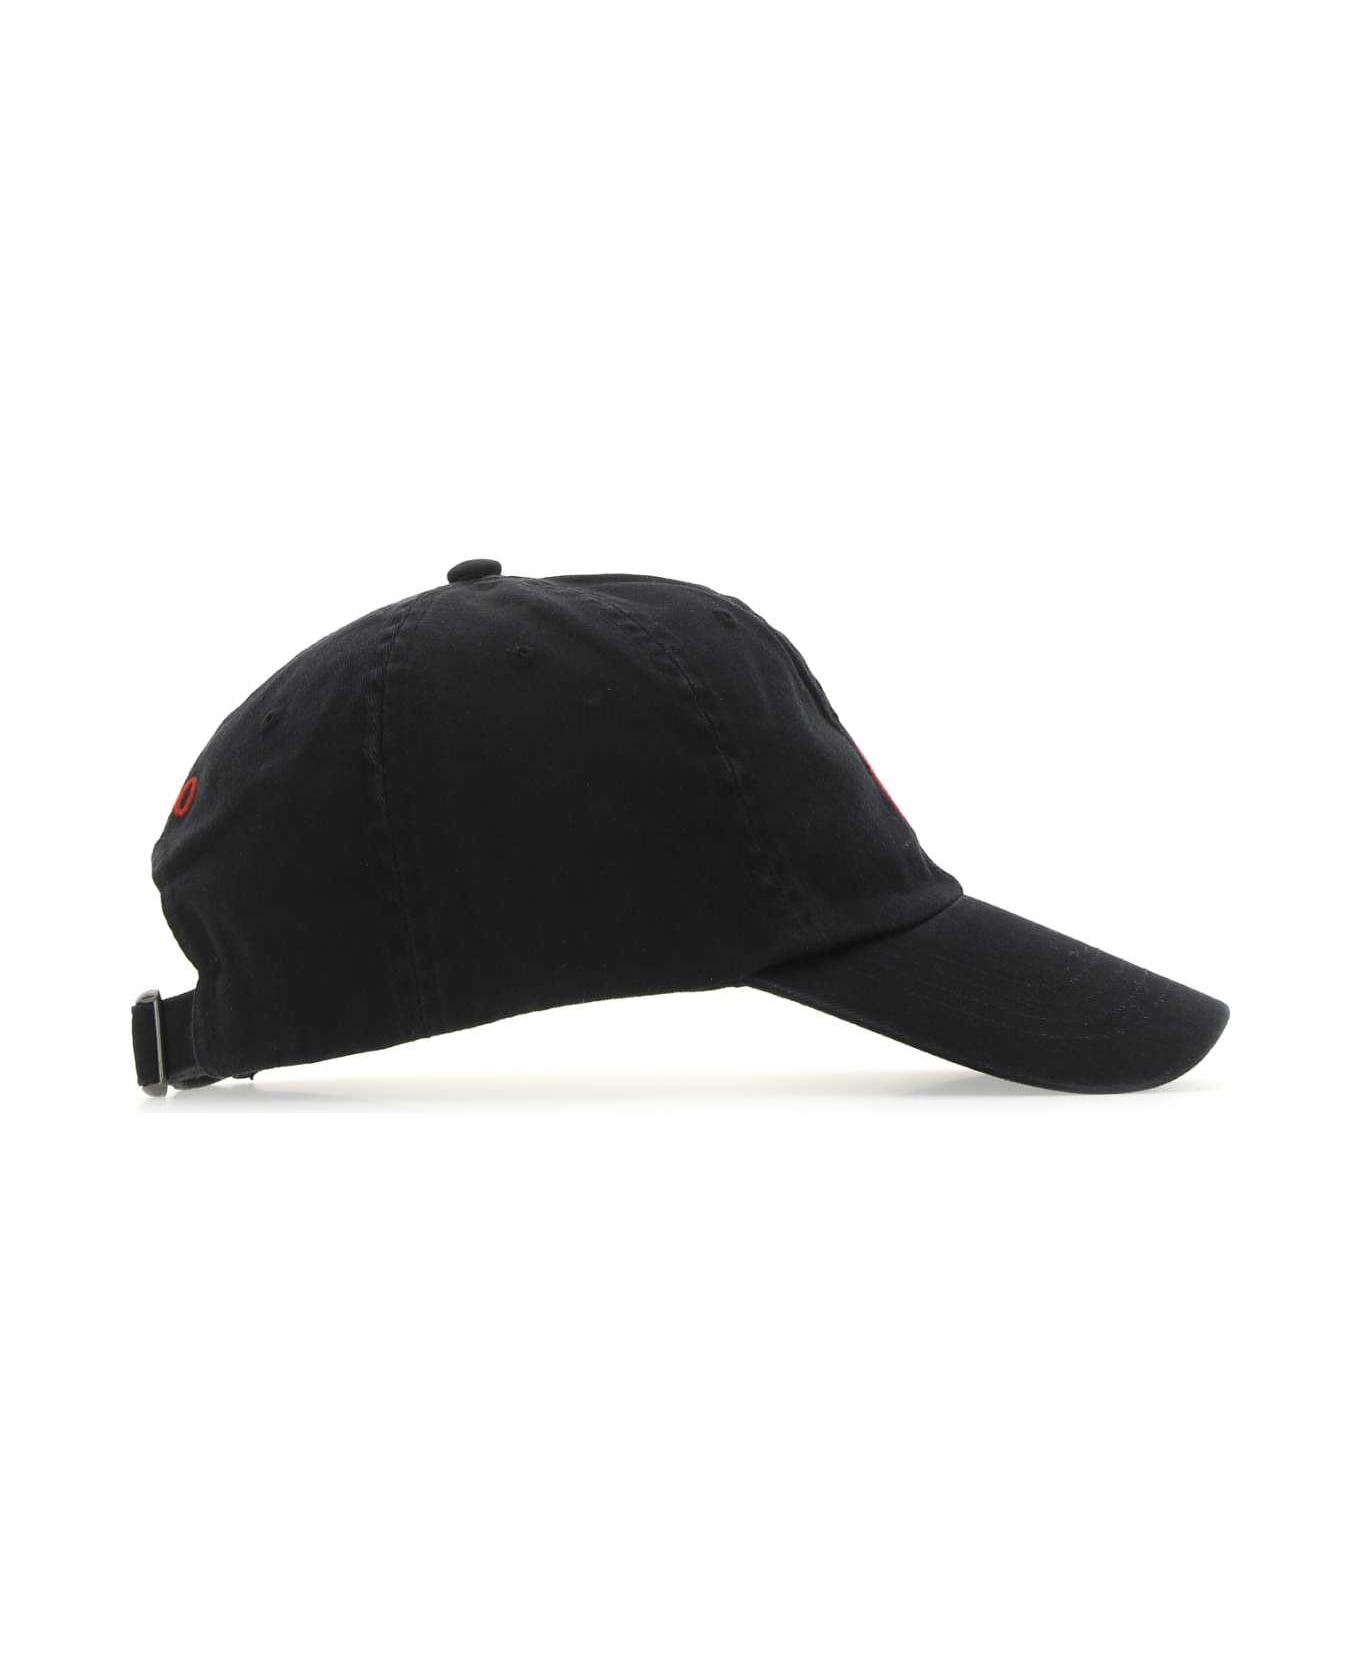 Polo Ralph Lauren Black Cotton Baseball Cap - Black